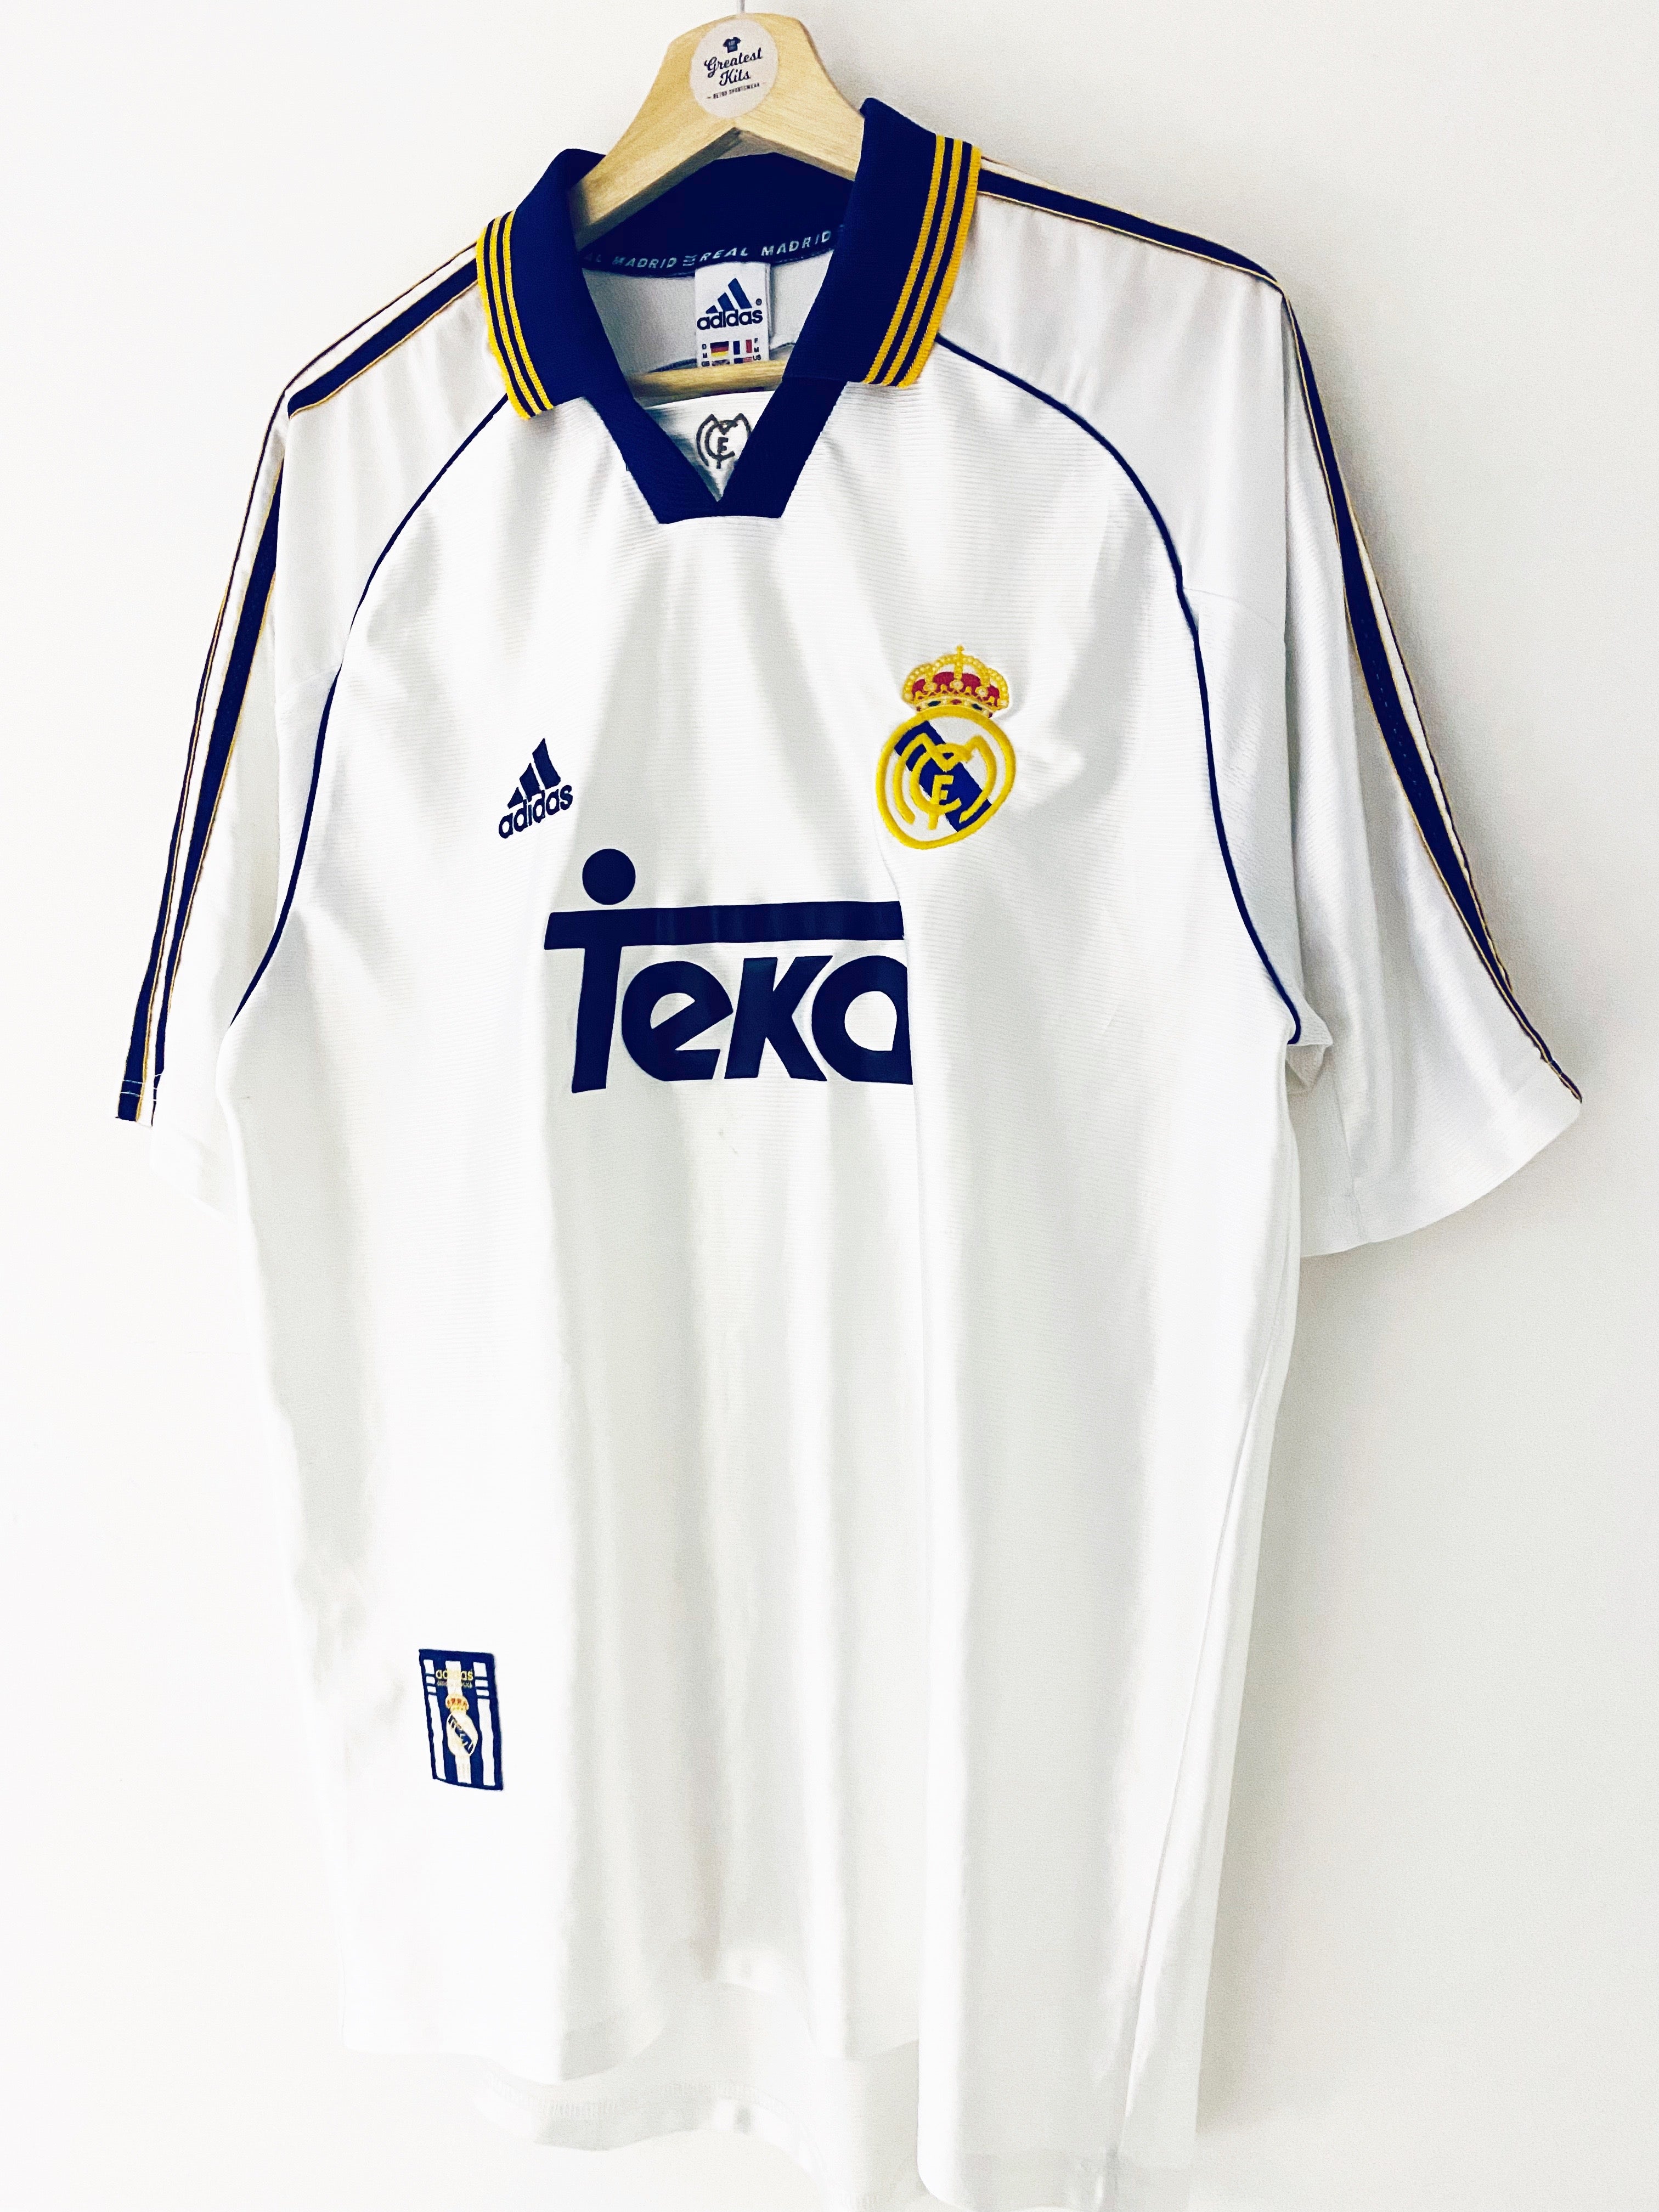 1998/00 Real Madrid Home Shirt (M) 8.5/10